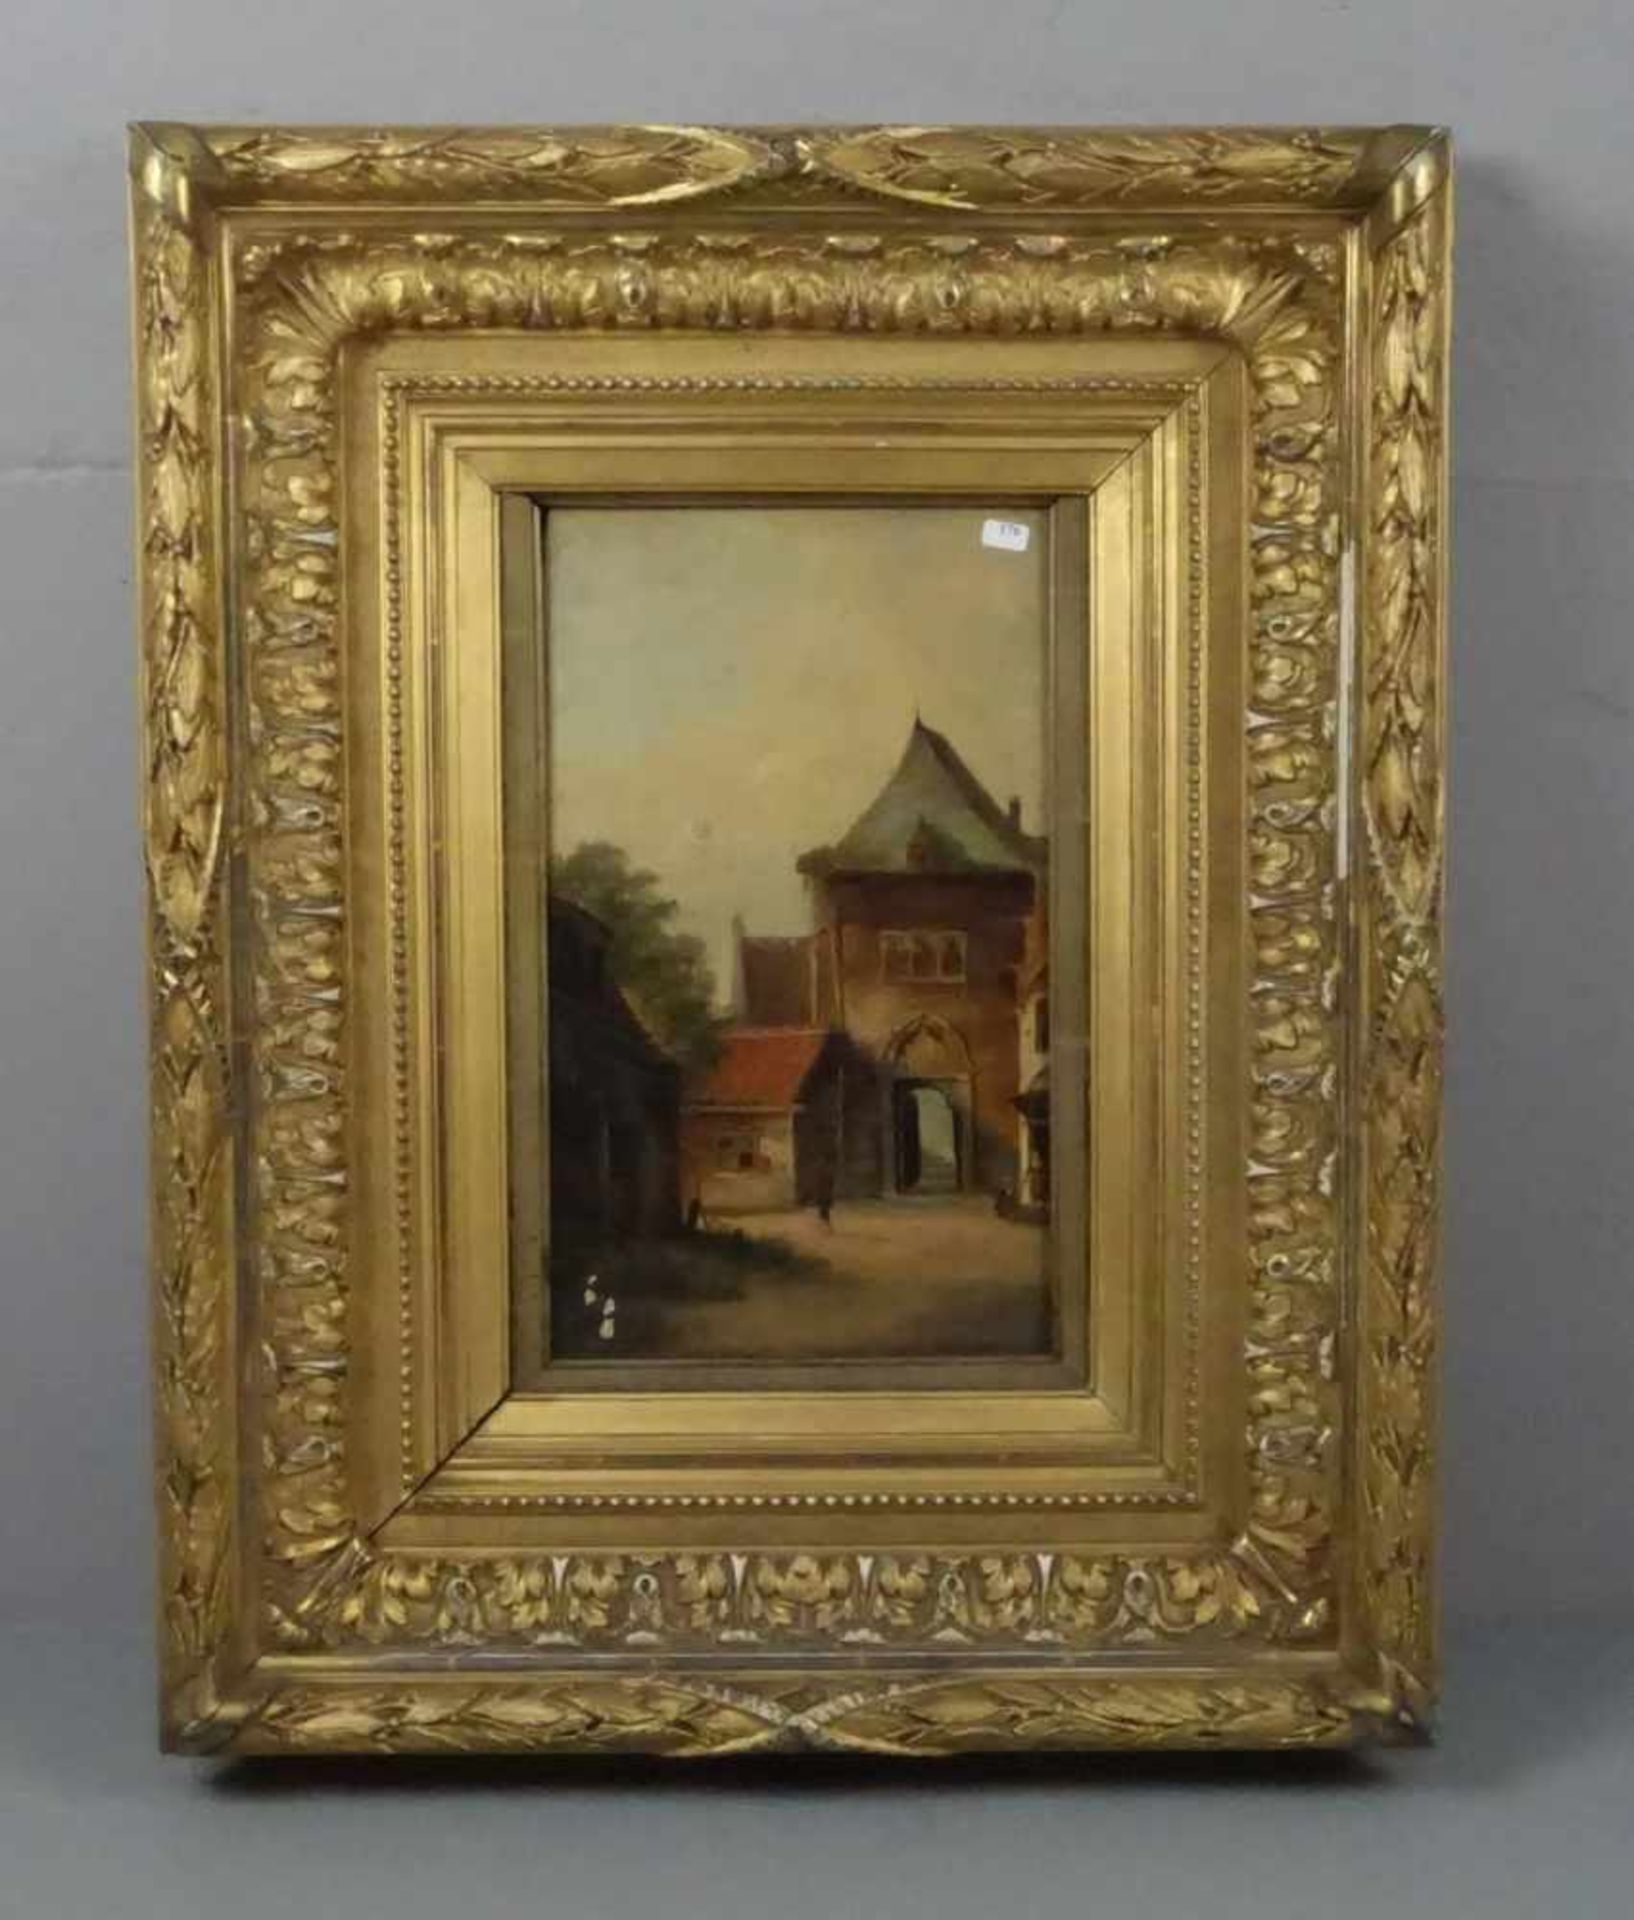 wohl KLINKENBERG, KAREL (1852-1924), Gemälde / painting: "Stadtvedute mit Gasse", Öl auf Holz /